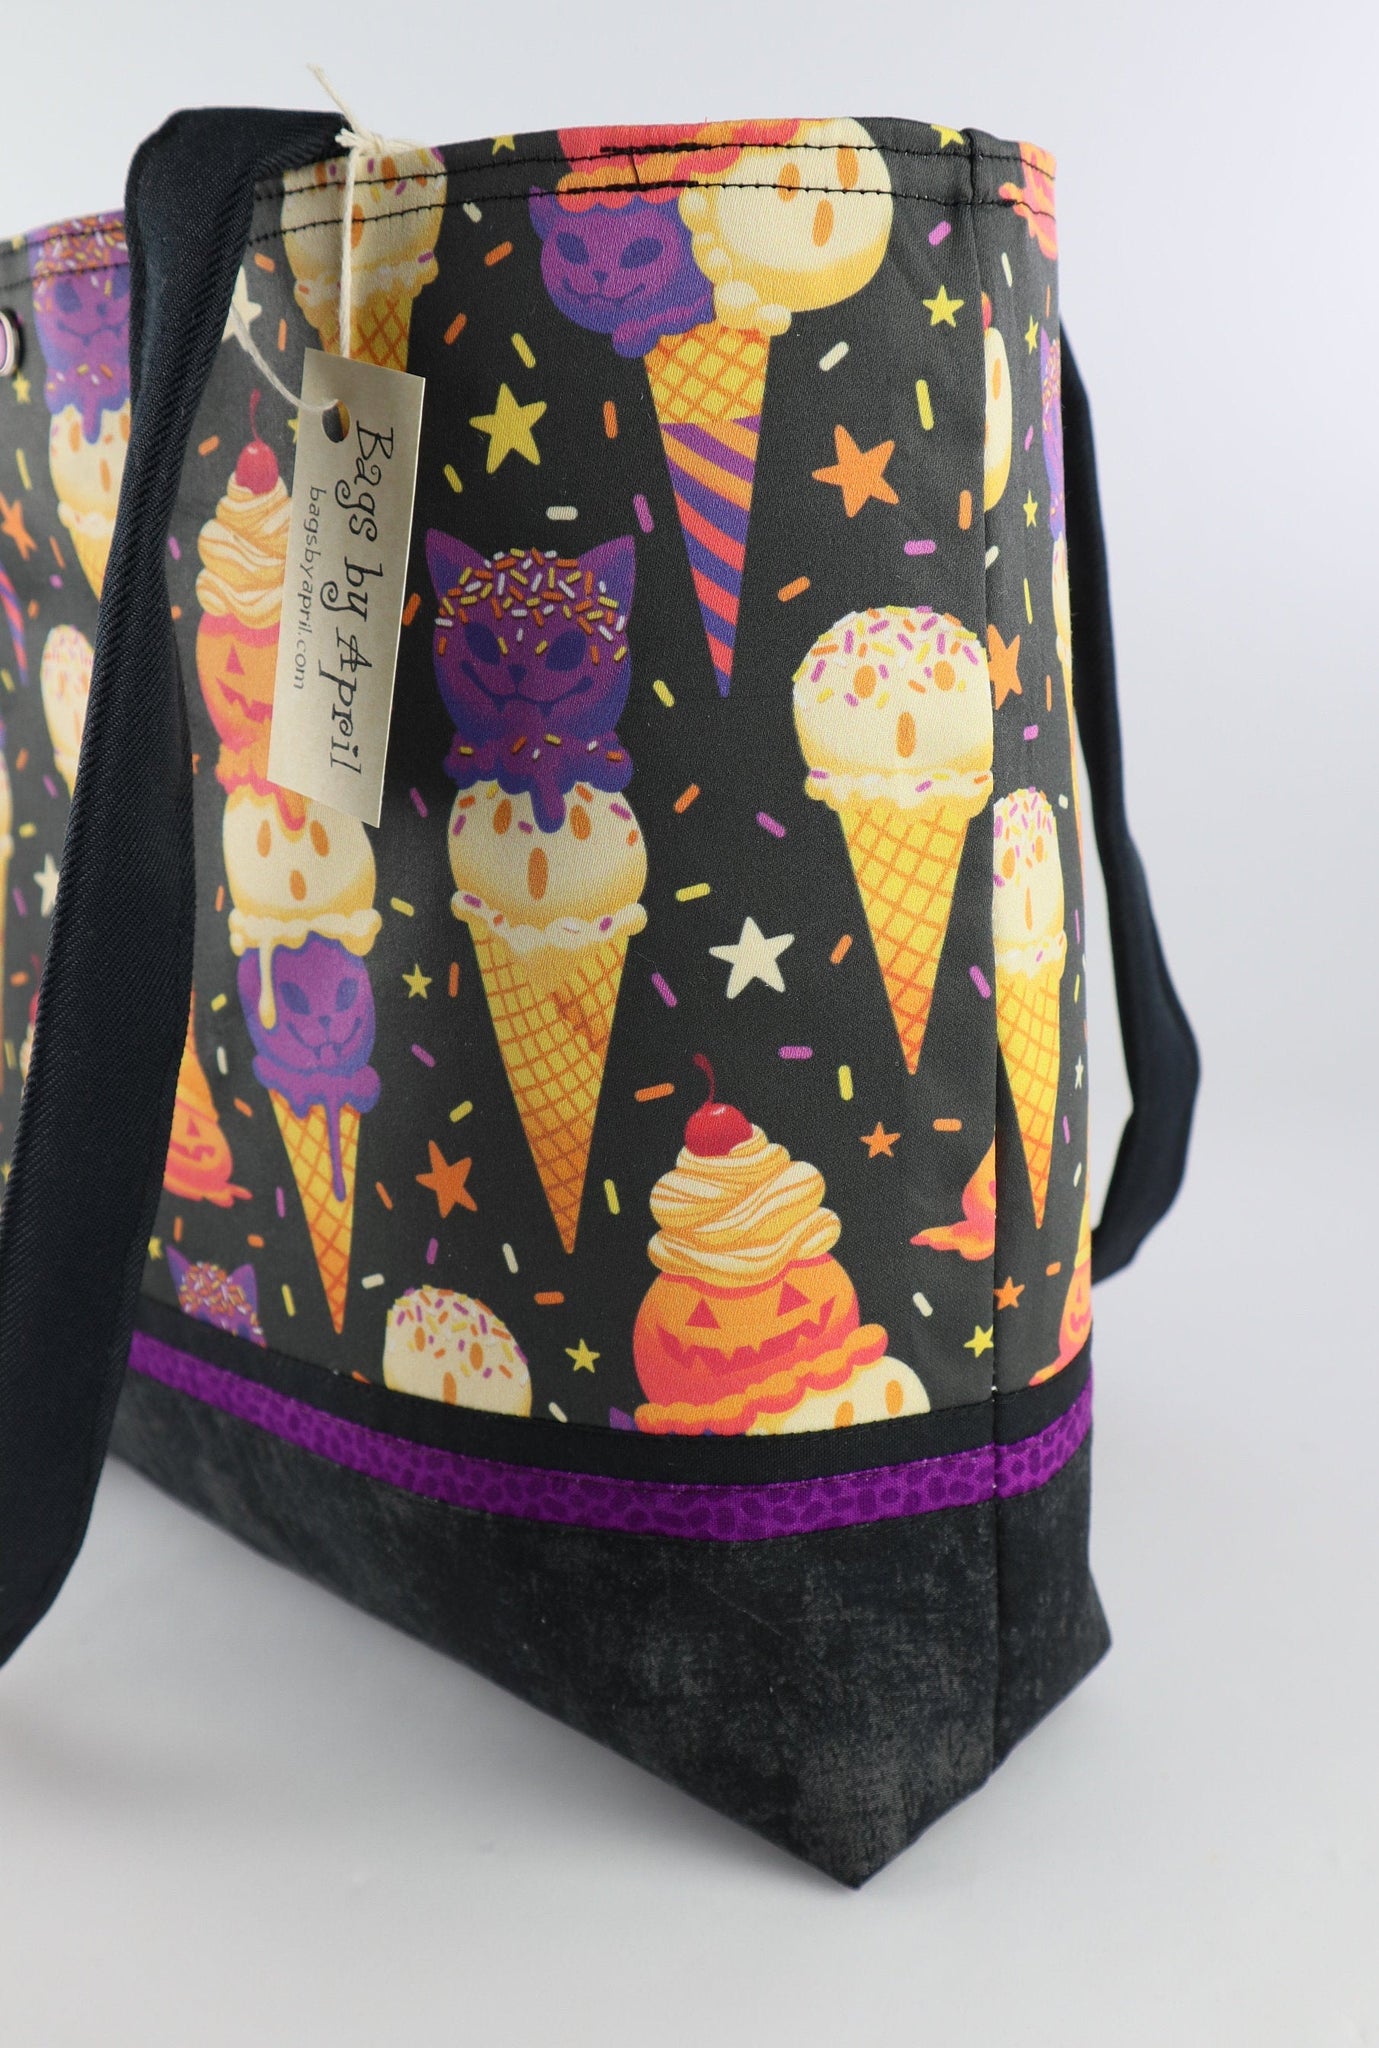 Ice Cream Shape Novelty Crossbody Bag for Women Purses and Handbags Girl's  Cartoon Shoulder Bag with Chain Strap Cute Clutch